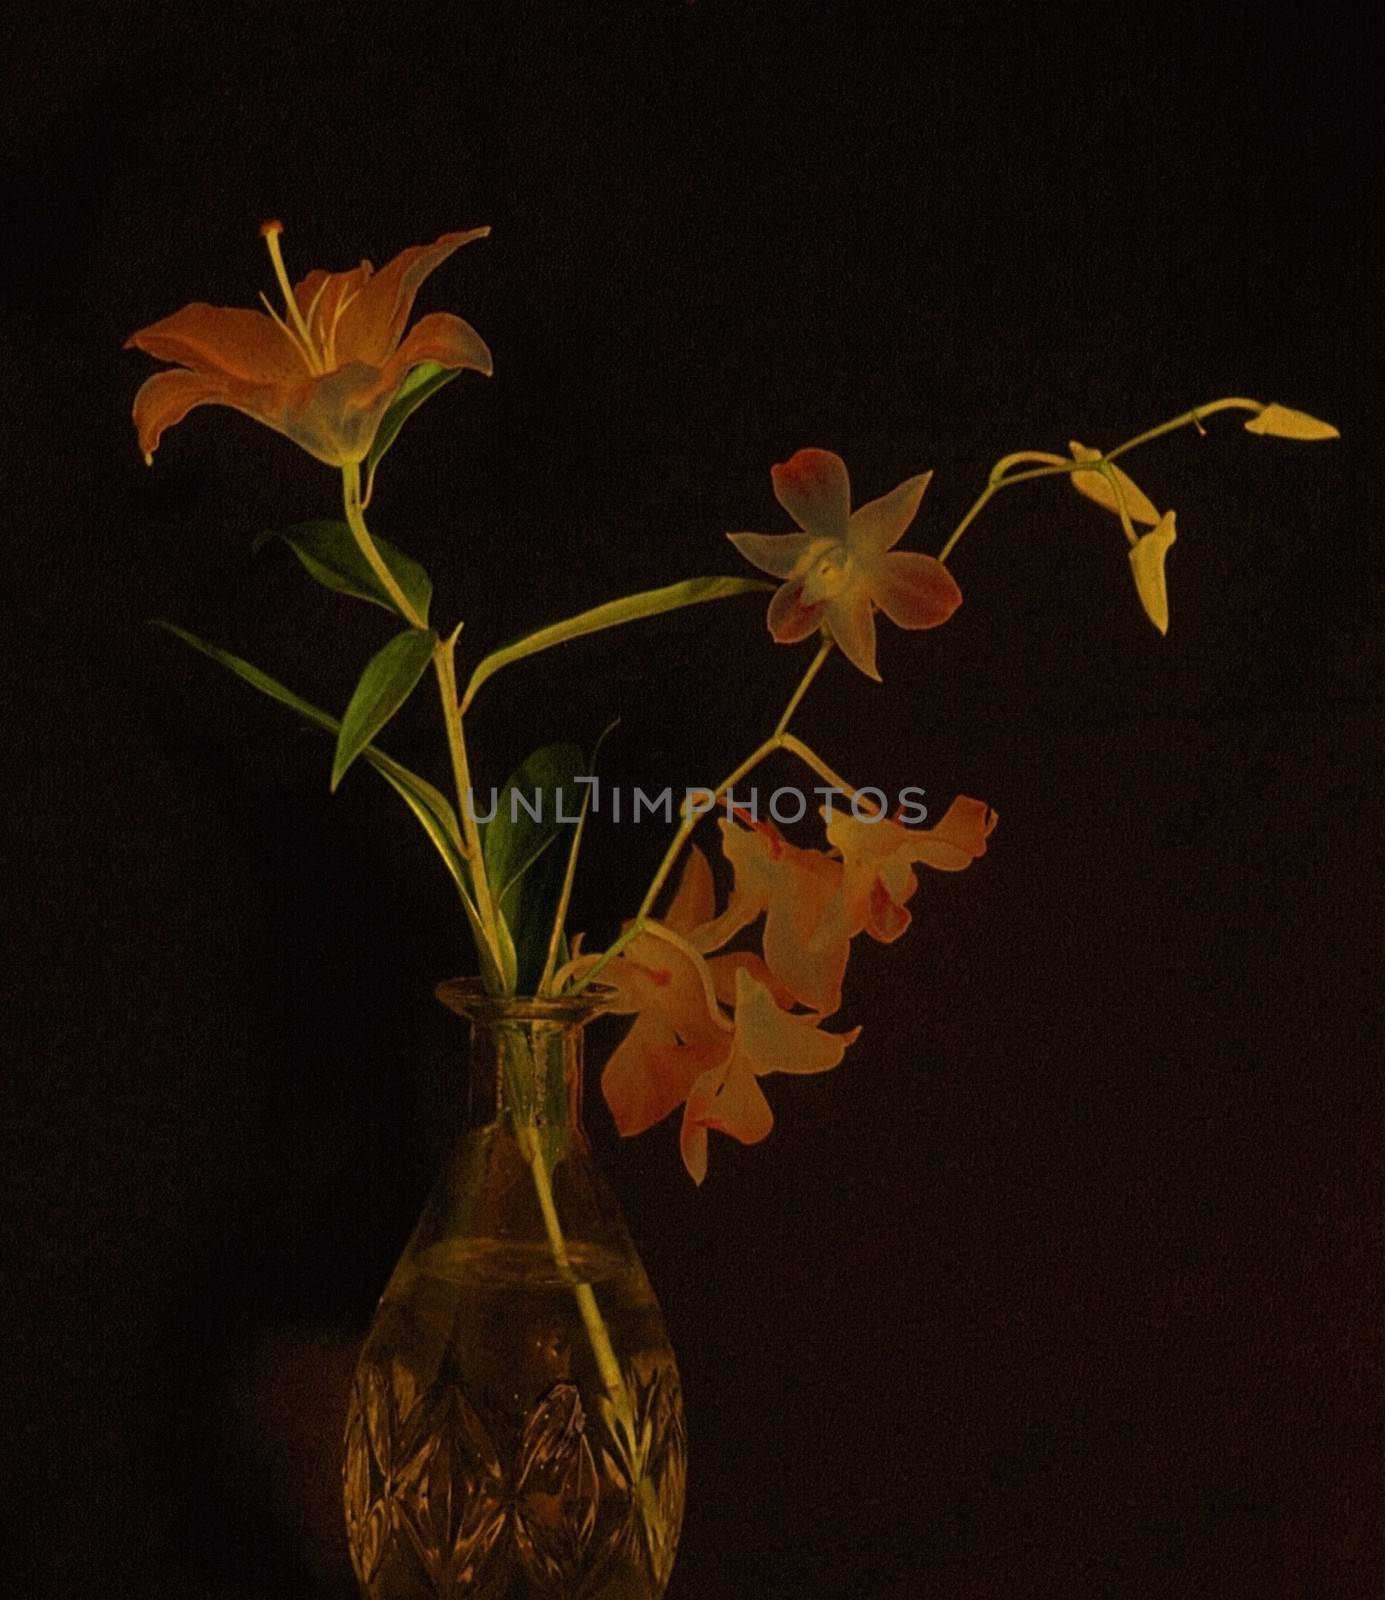 Flowers in vase. Black background